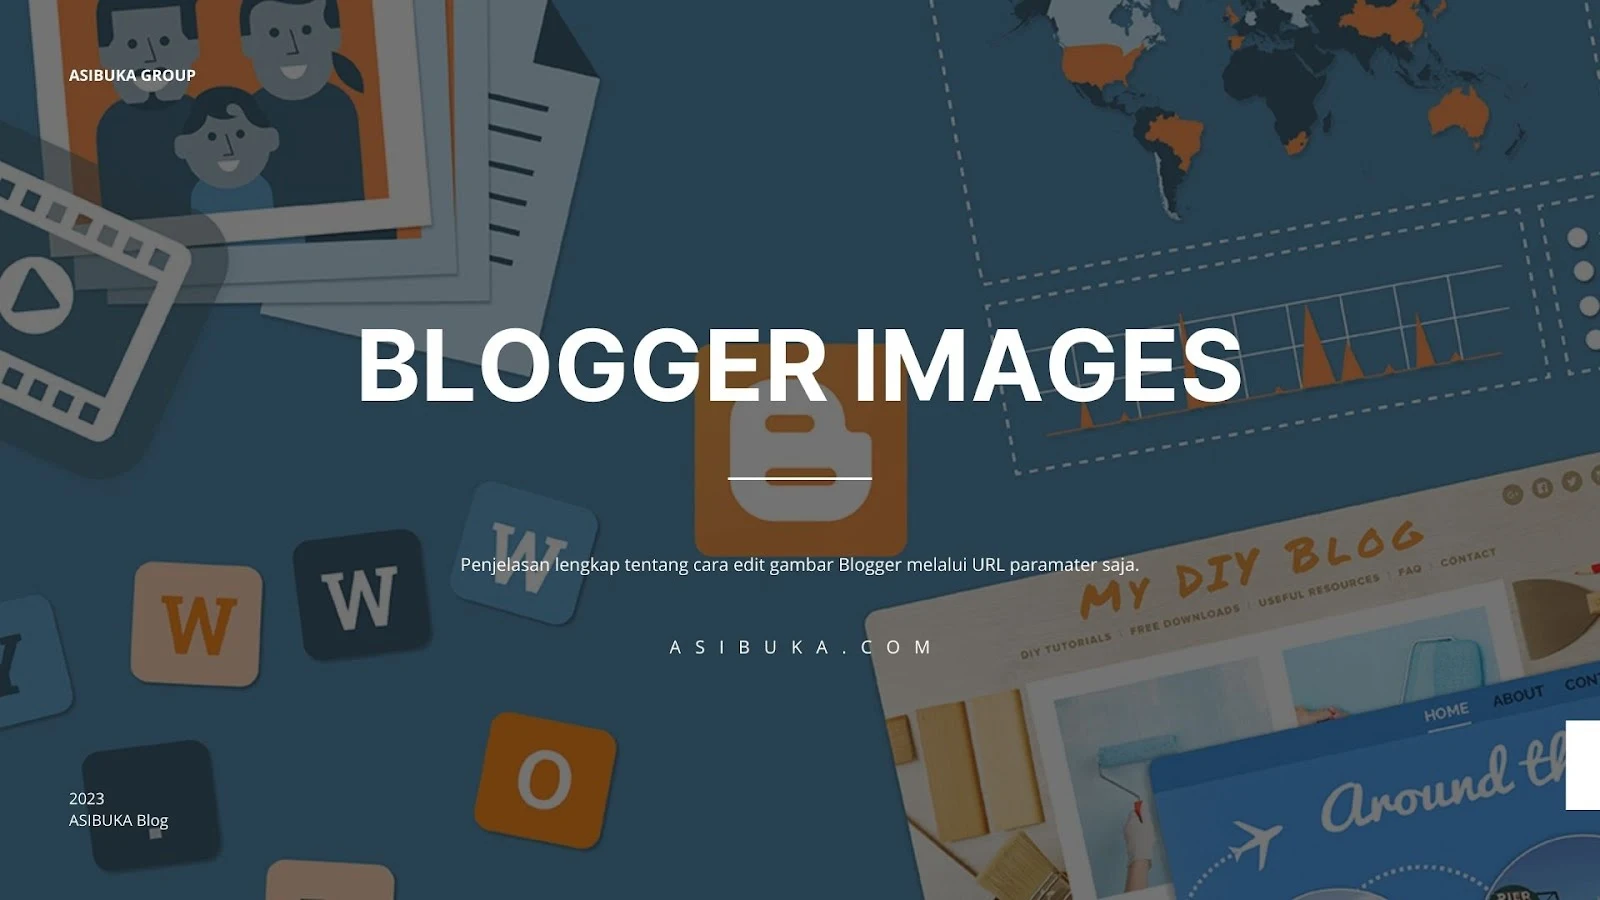 Cara Edit Gambar Blogger Melalui URL Parameter